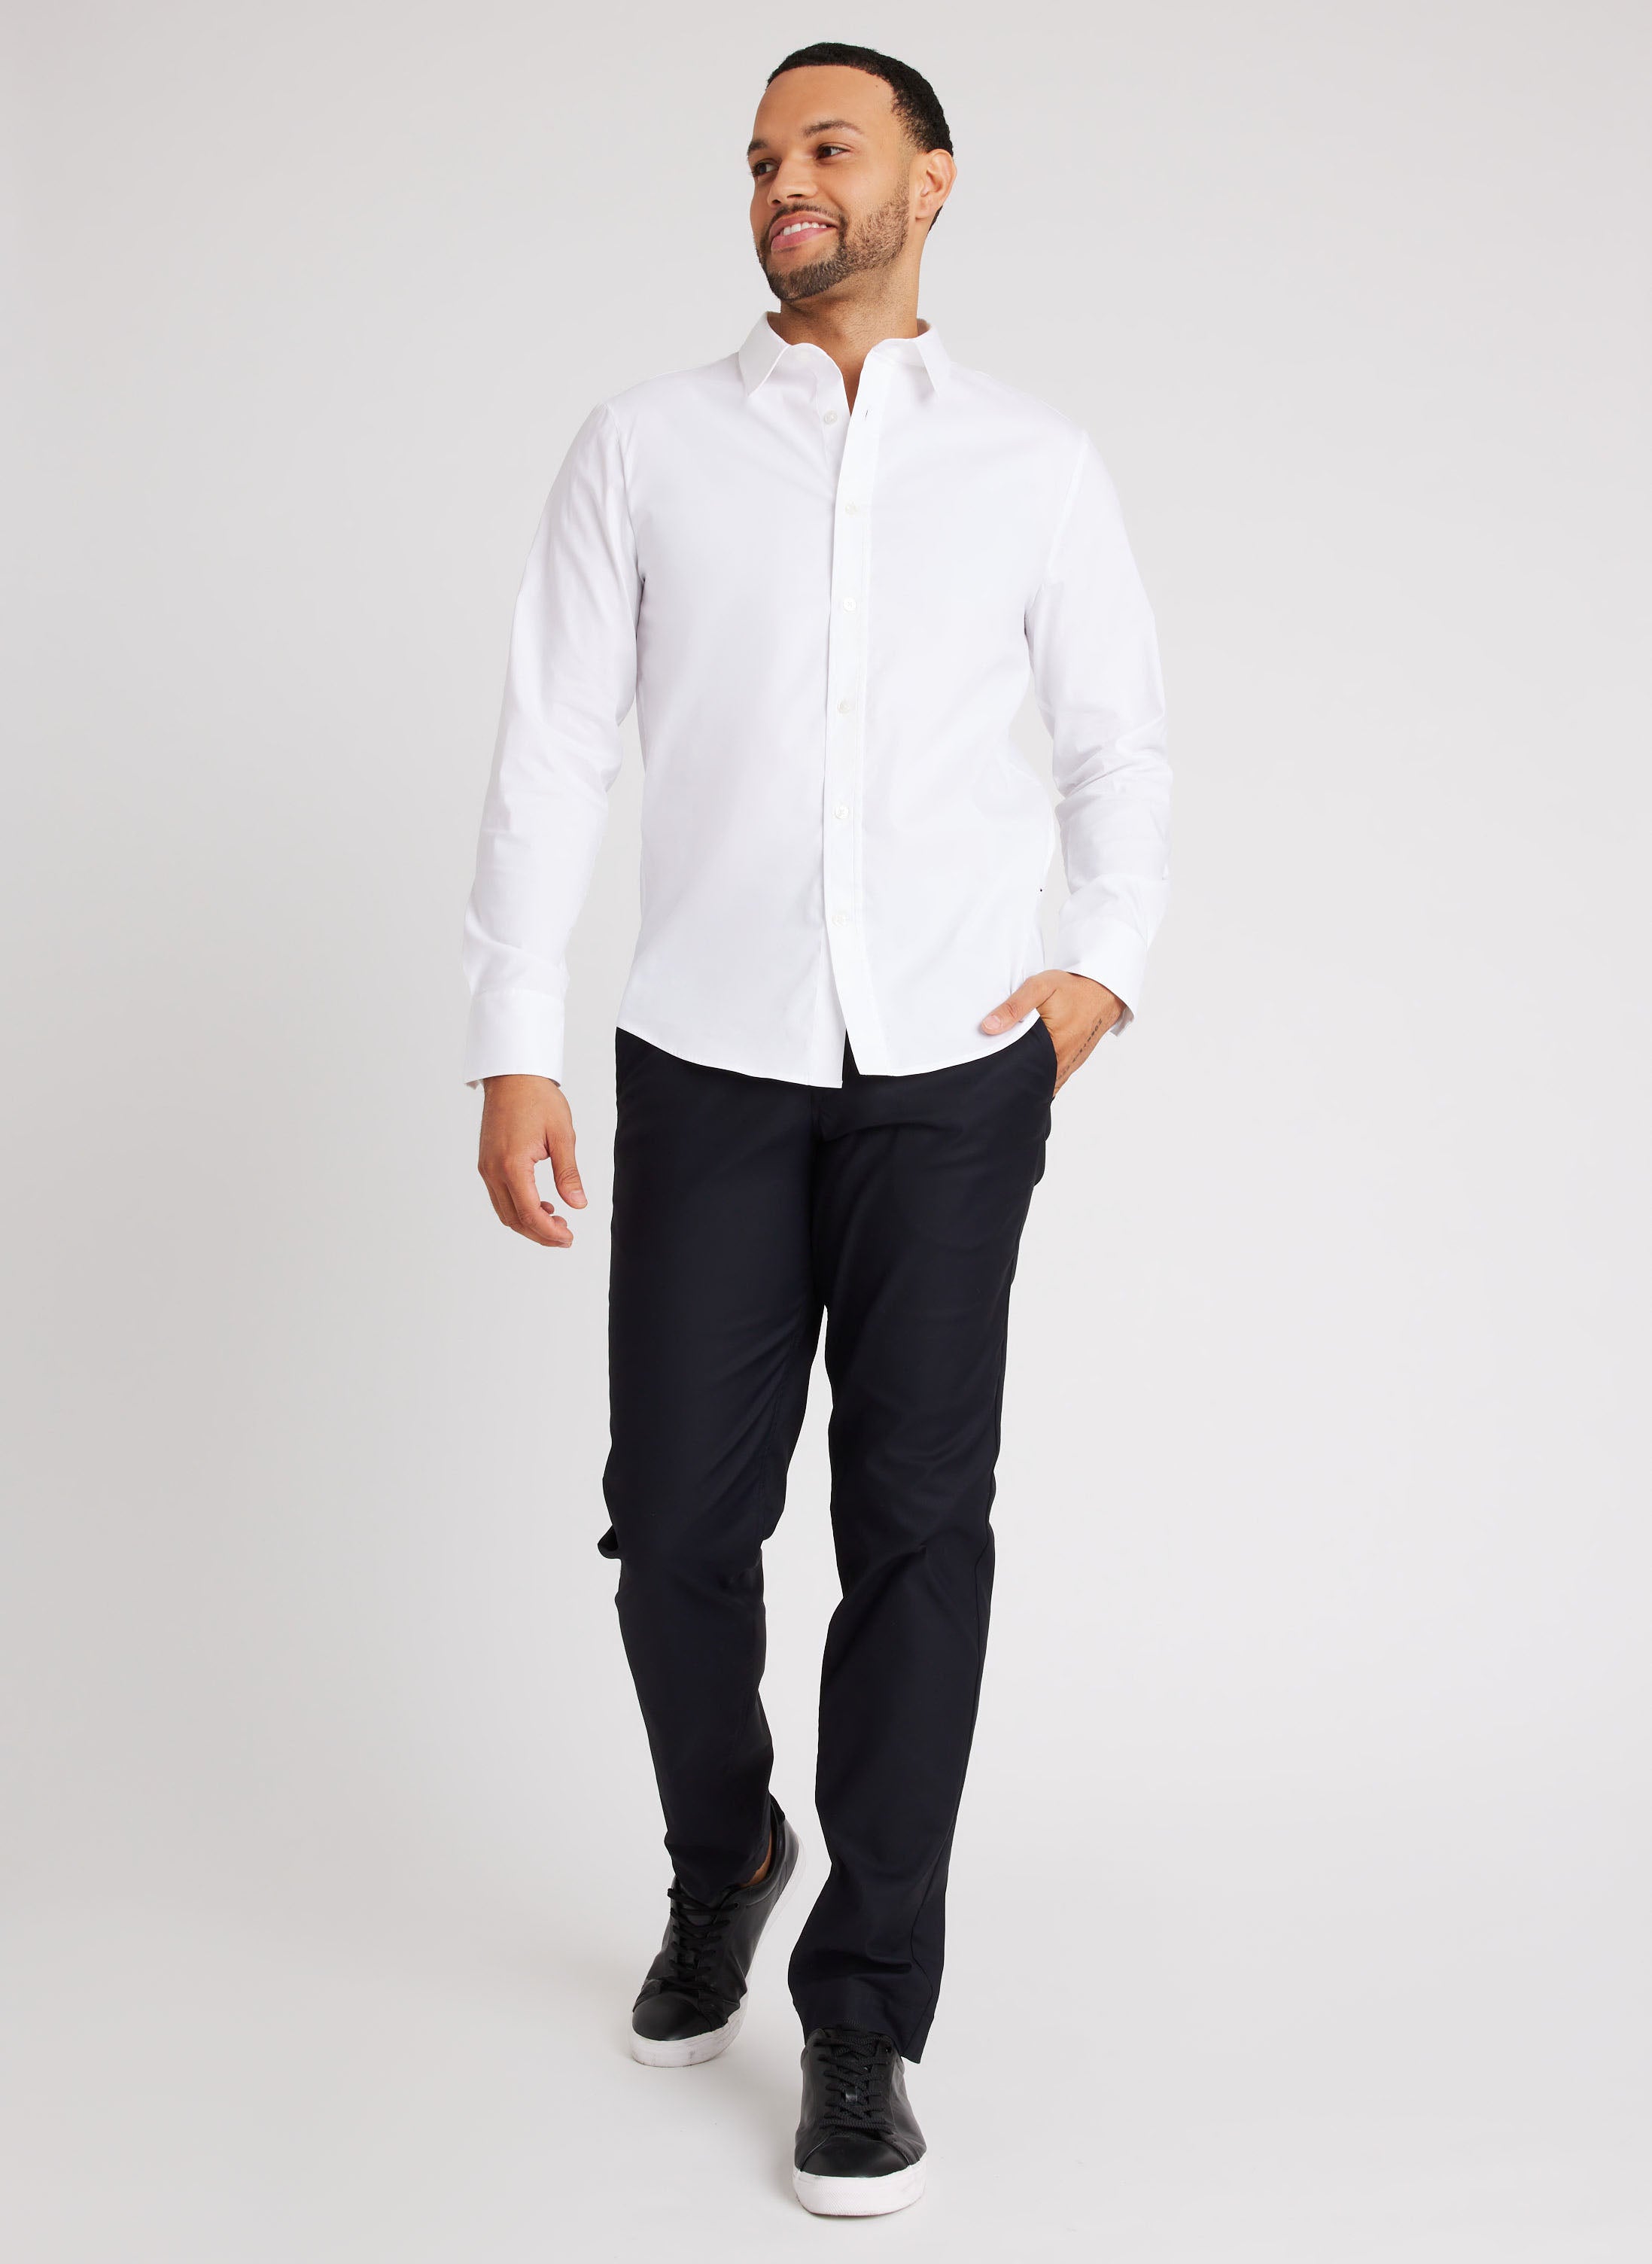 Kit and Ace — Stay Cool Poplin Long Sleeve Shirt